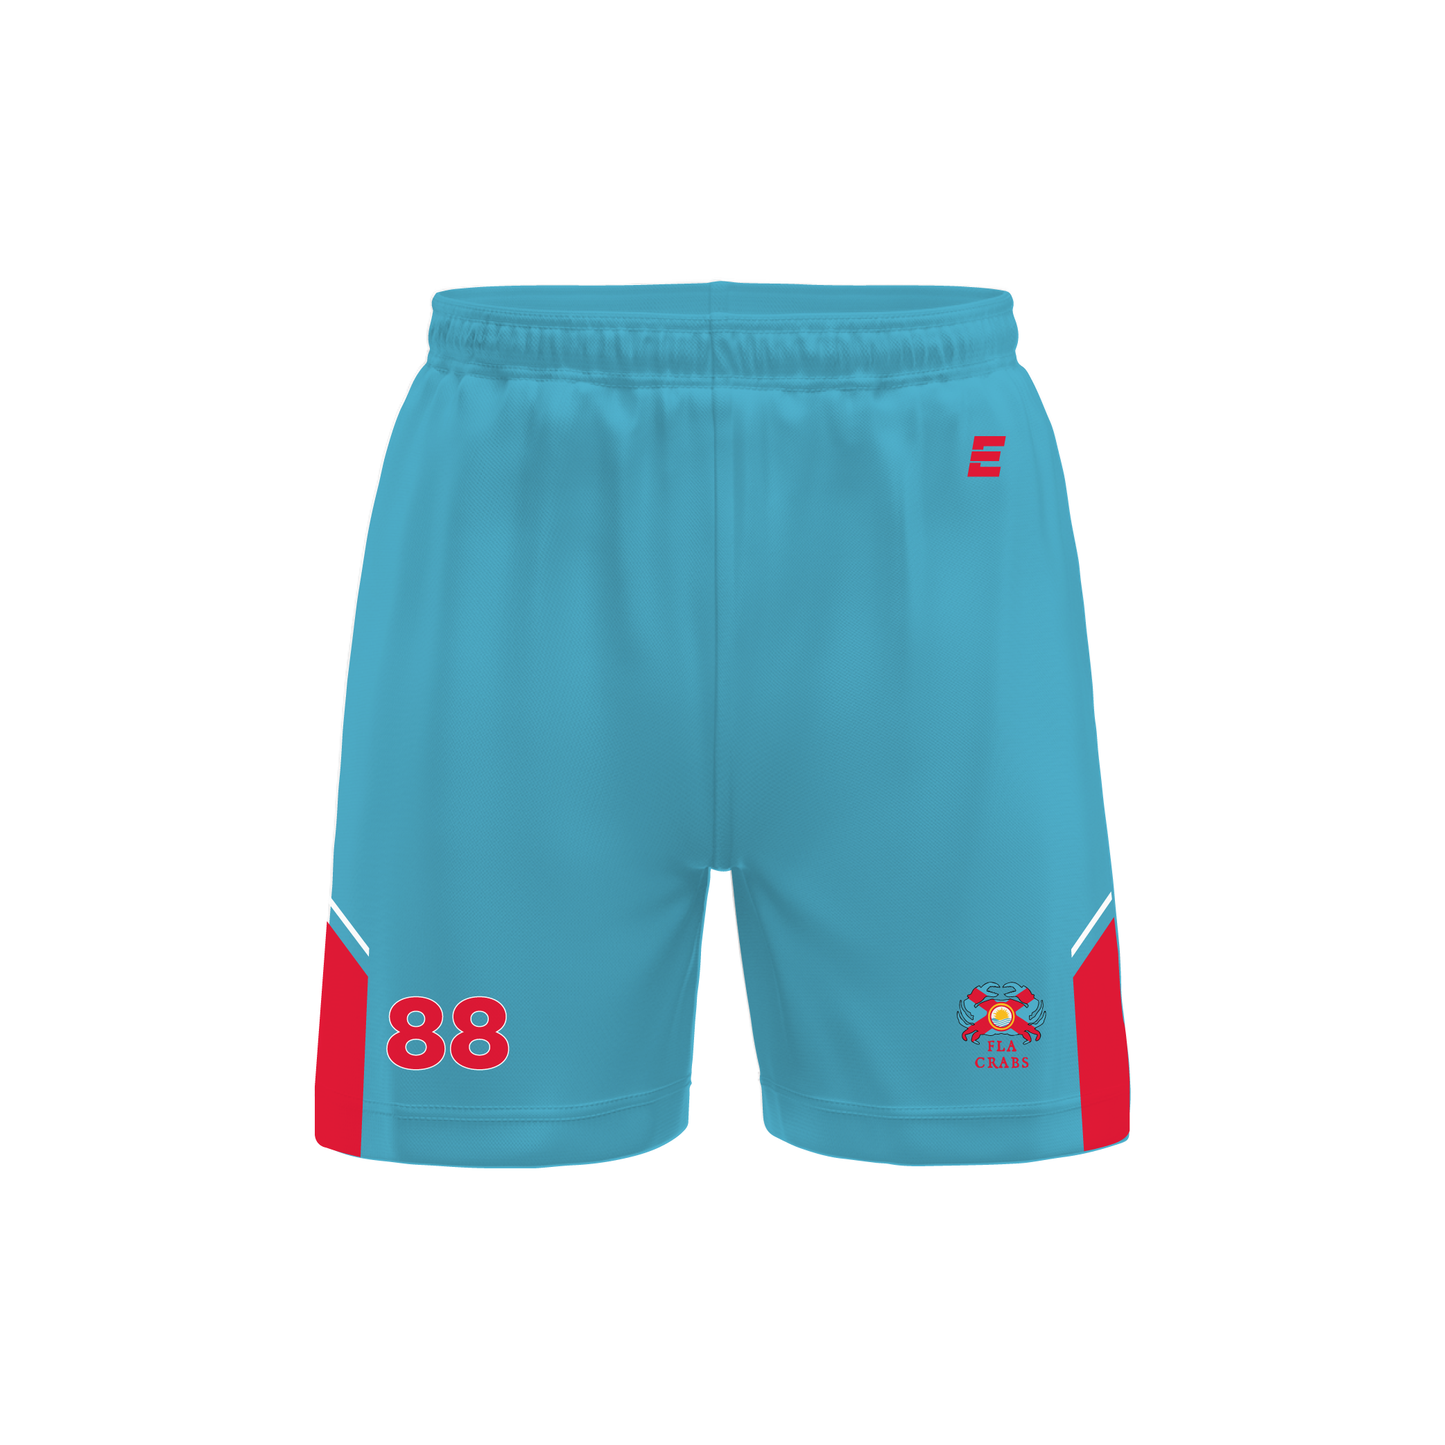 FLA Crabs - CUSTOM Men's Gym Shorts Light Blue